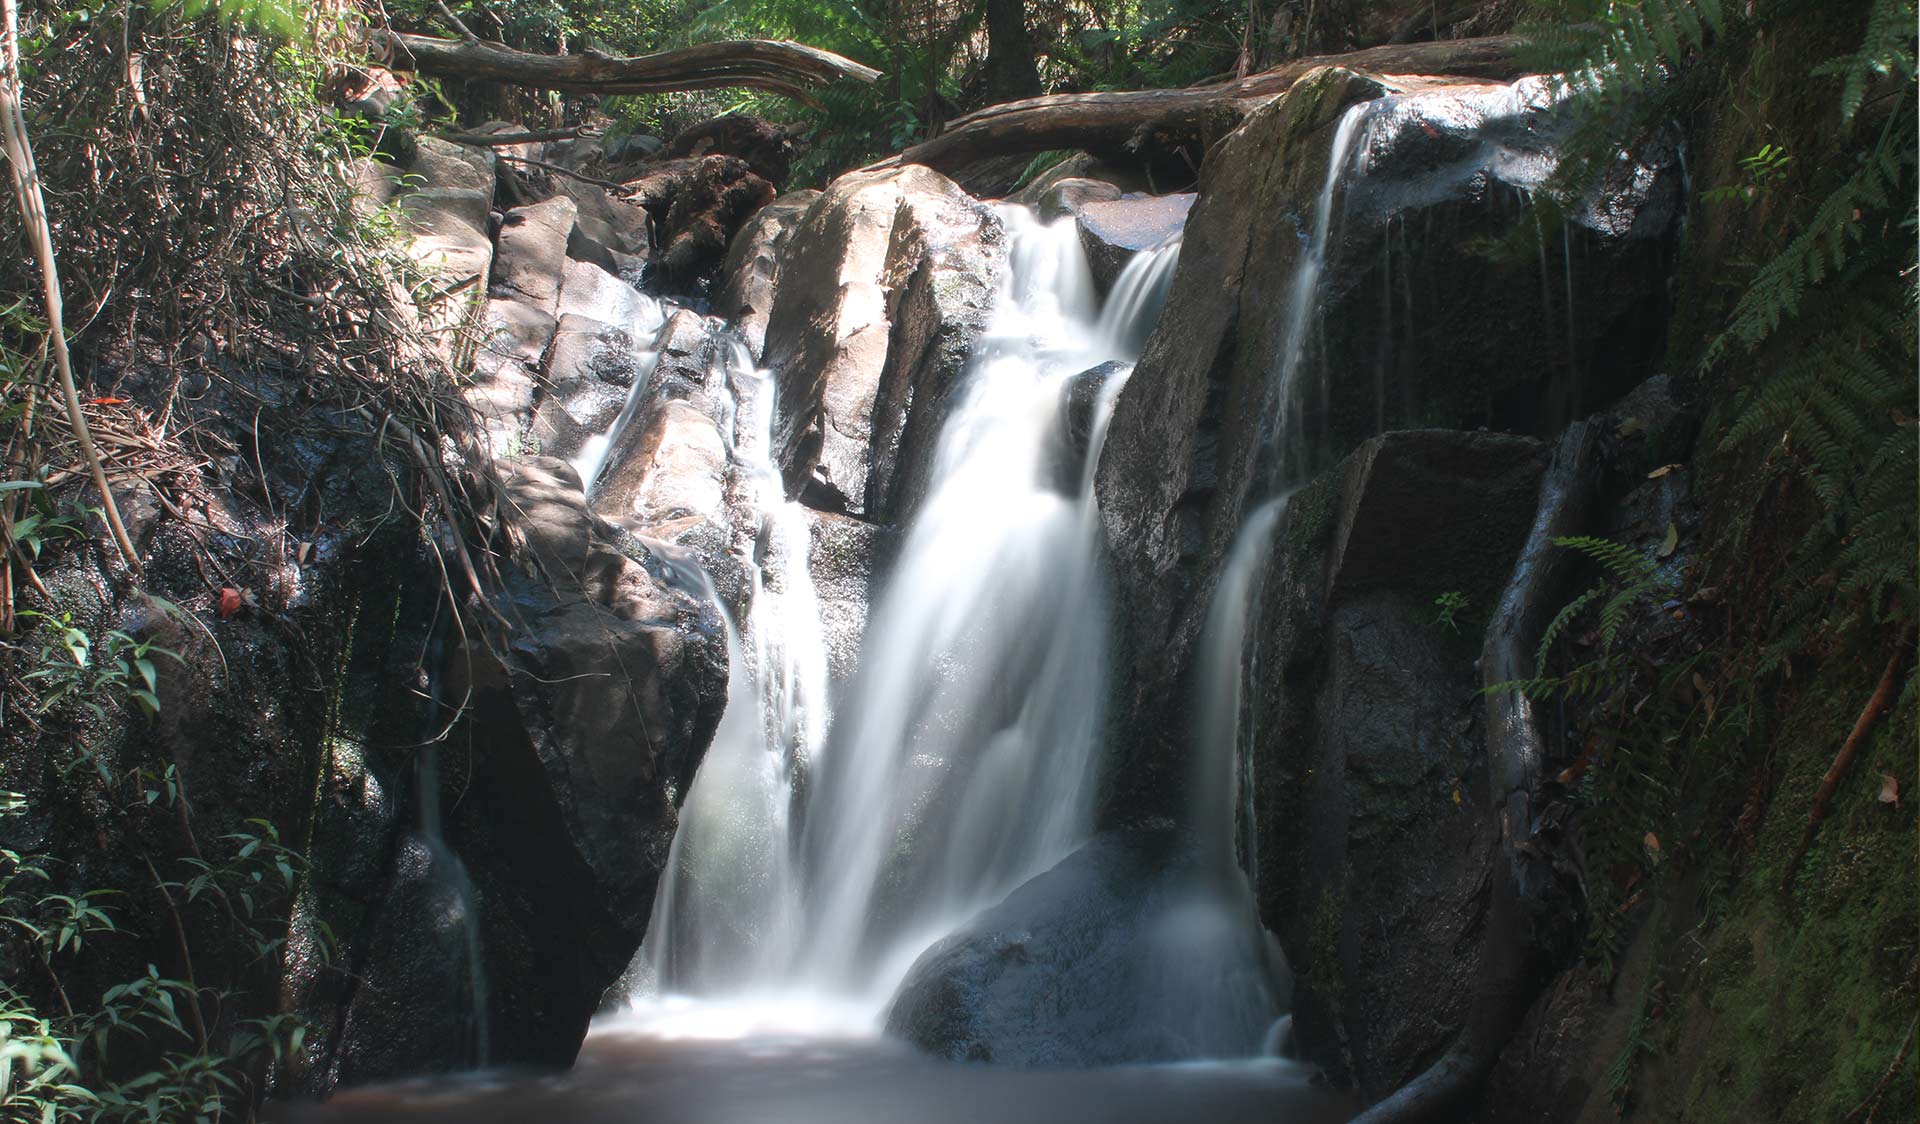 Water cascades over Olinda Falls